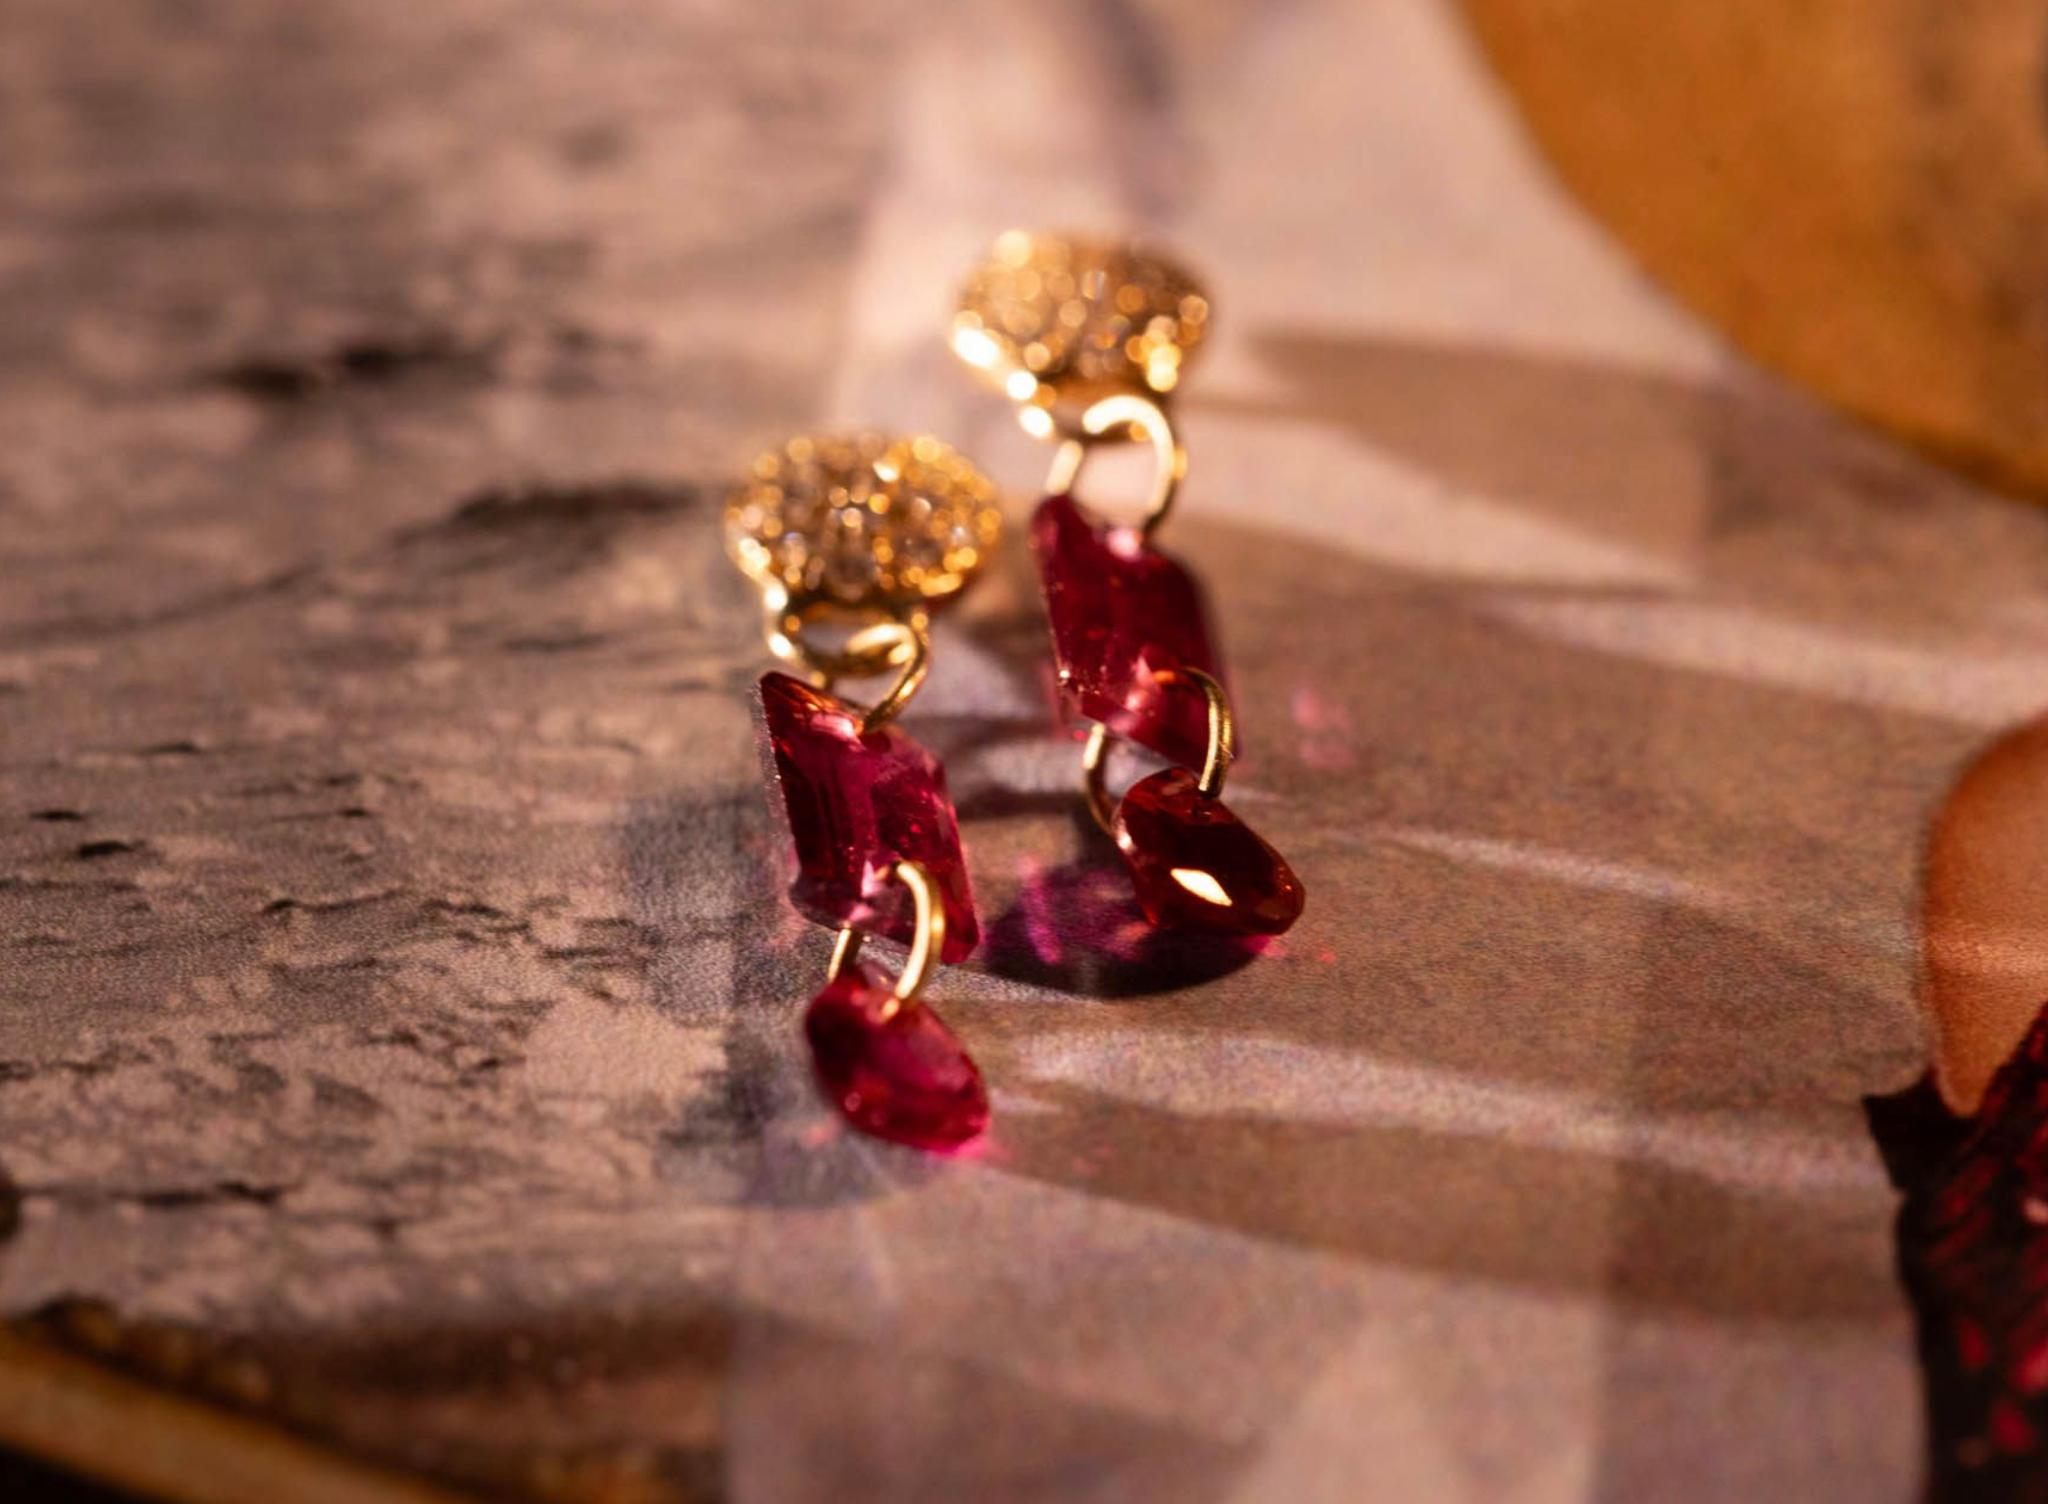 Brilliant Cut Paris & Lily handmade, 18K gold earrings with pave diamond studs & garnets